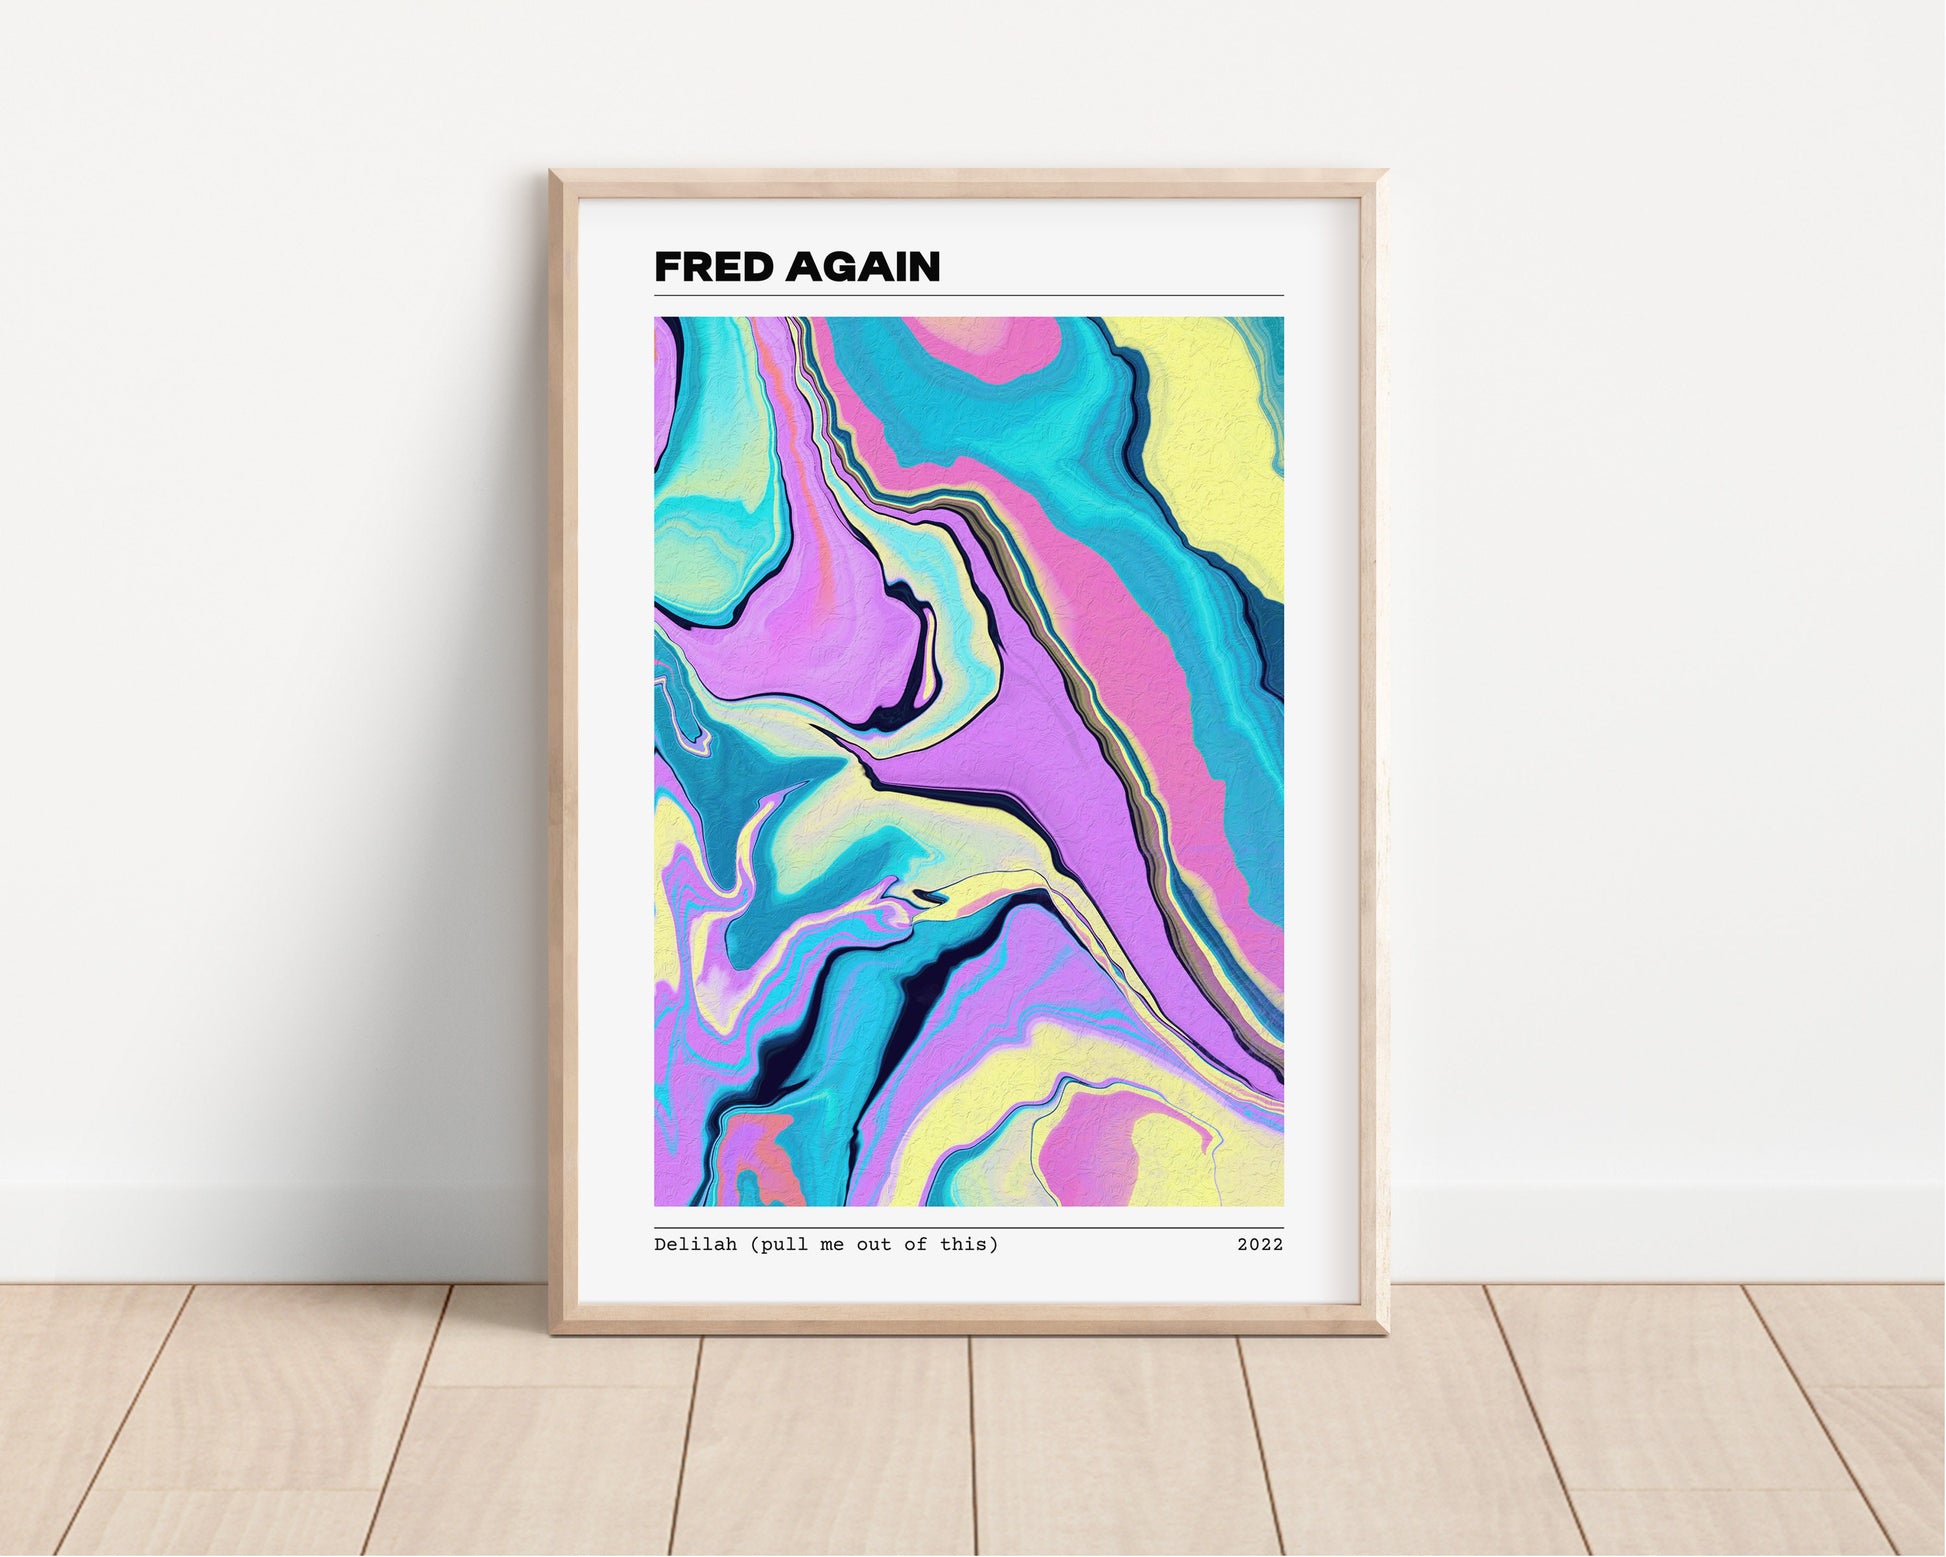 Fred Again Inspired Art Print, Fred Again Wall Art, Kyle - I found you, Music Print, Music Art, Music Wall Art, Fred Again, Music Lyrics